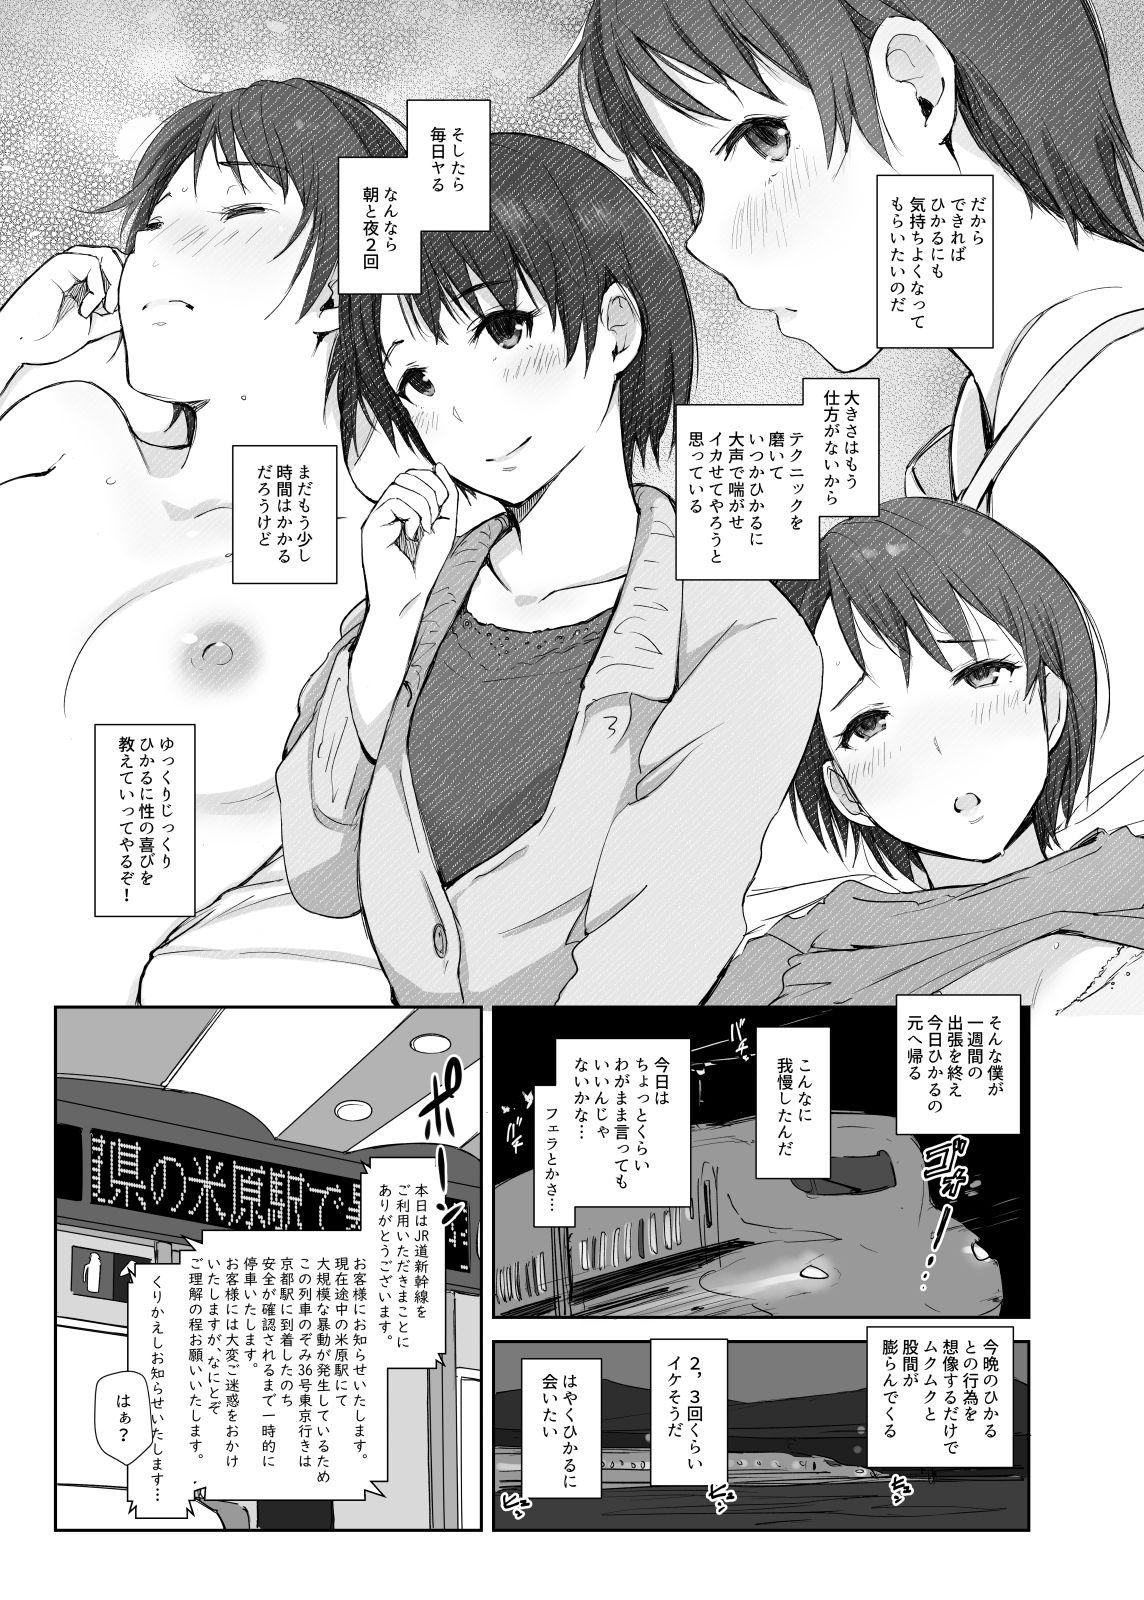 Older Saikou ni Tabegoro no Yoru - I made her mine last night. - Original Oriental - Page 4